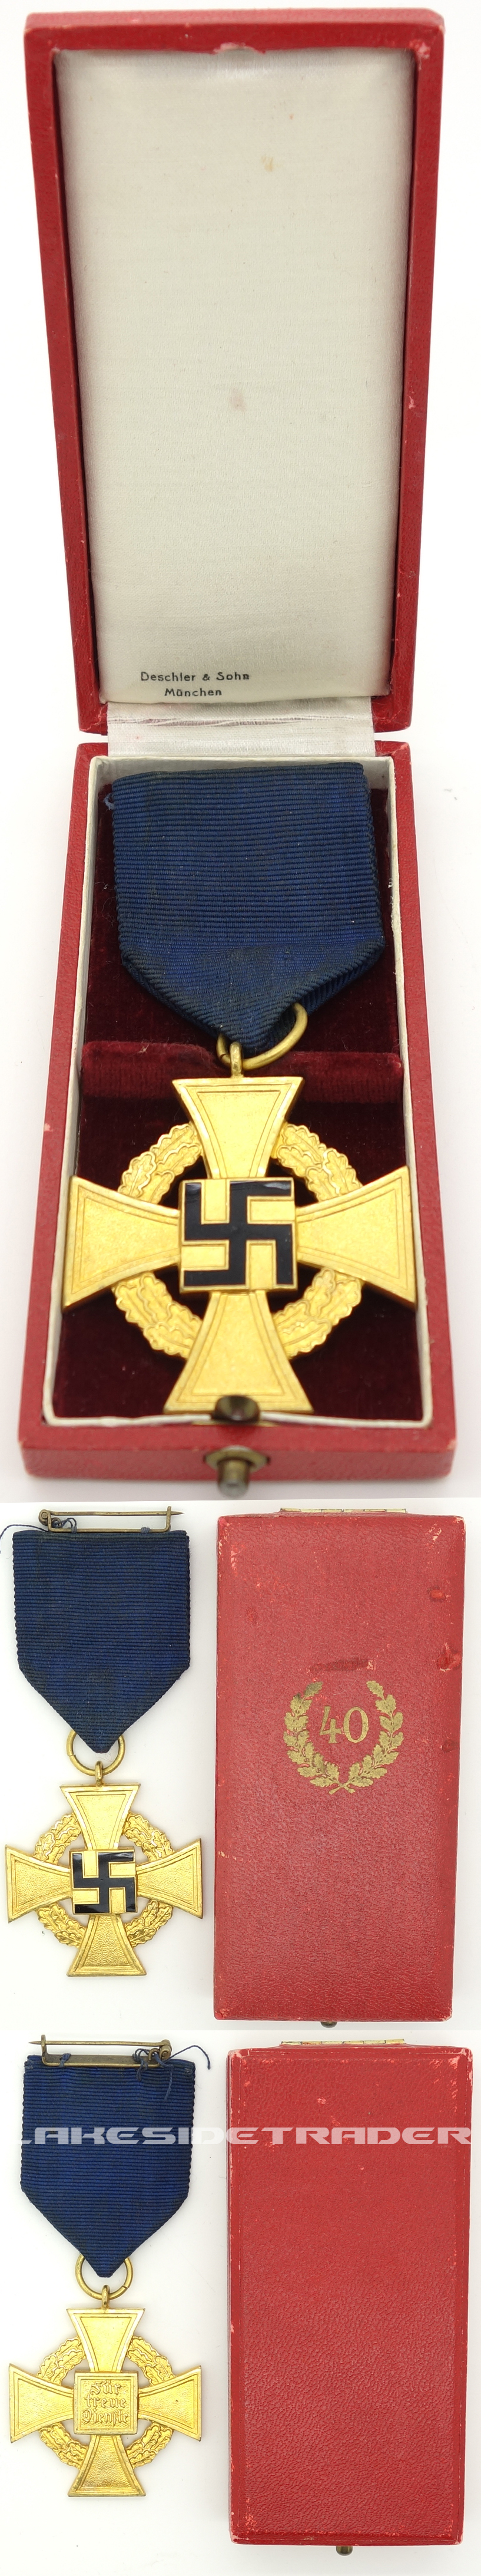 Cased NSDAP 40 Year Faithful Service Cross by Deschler